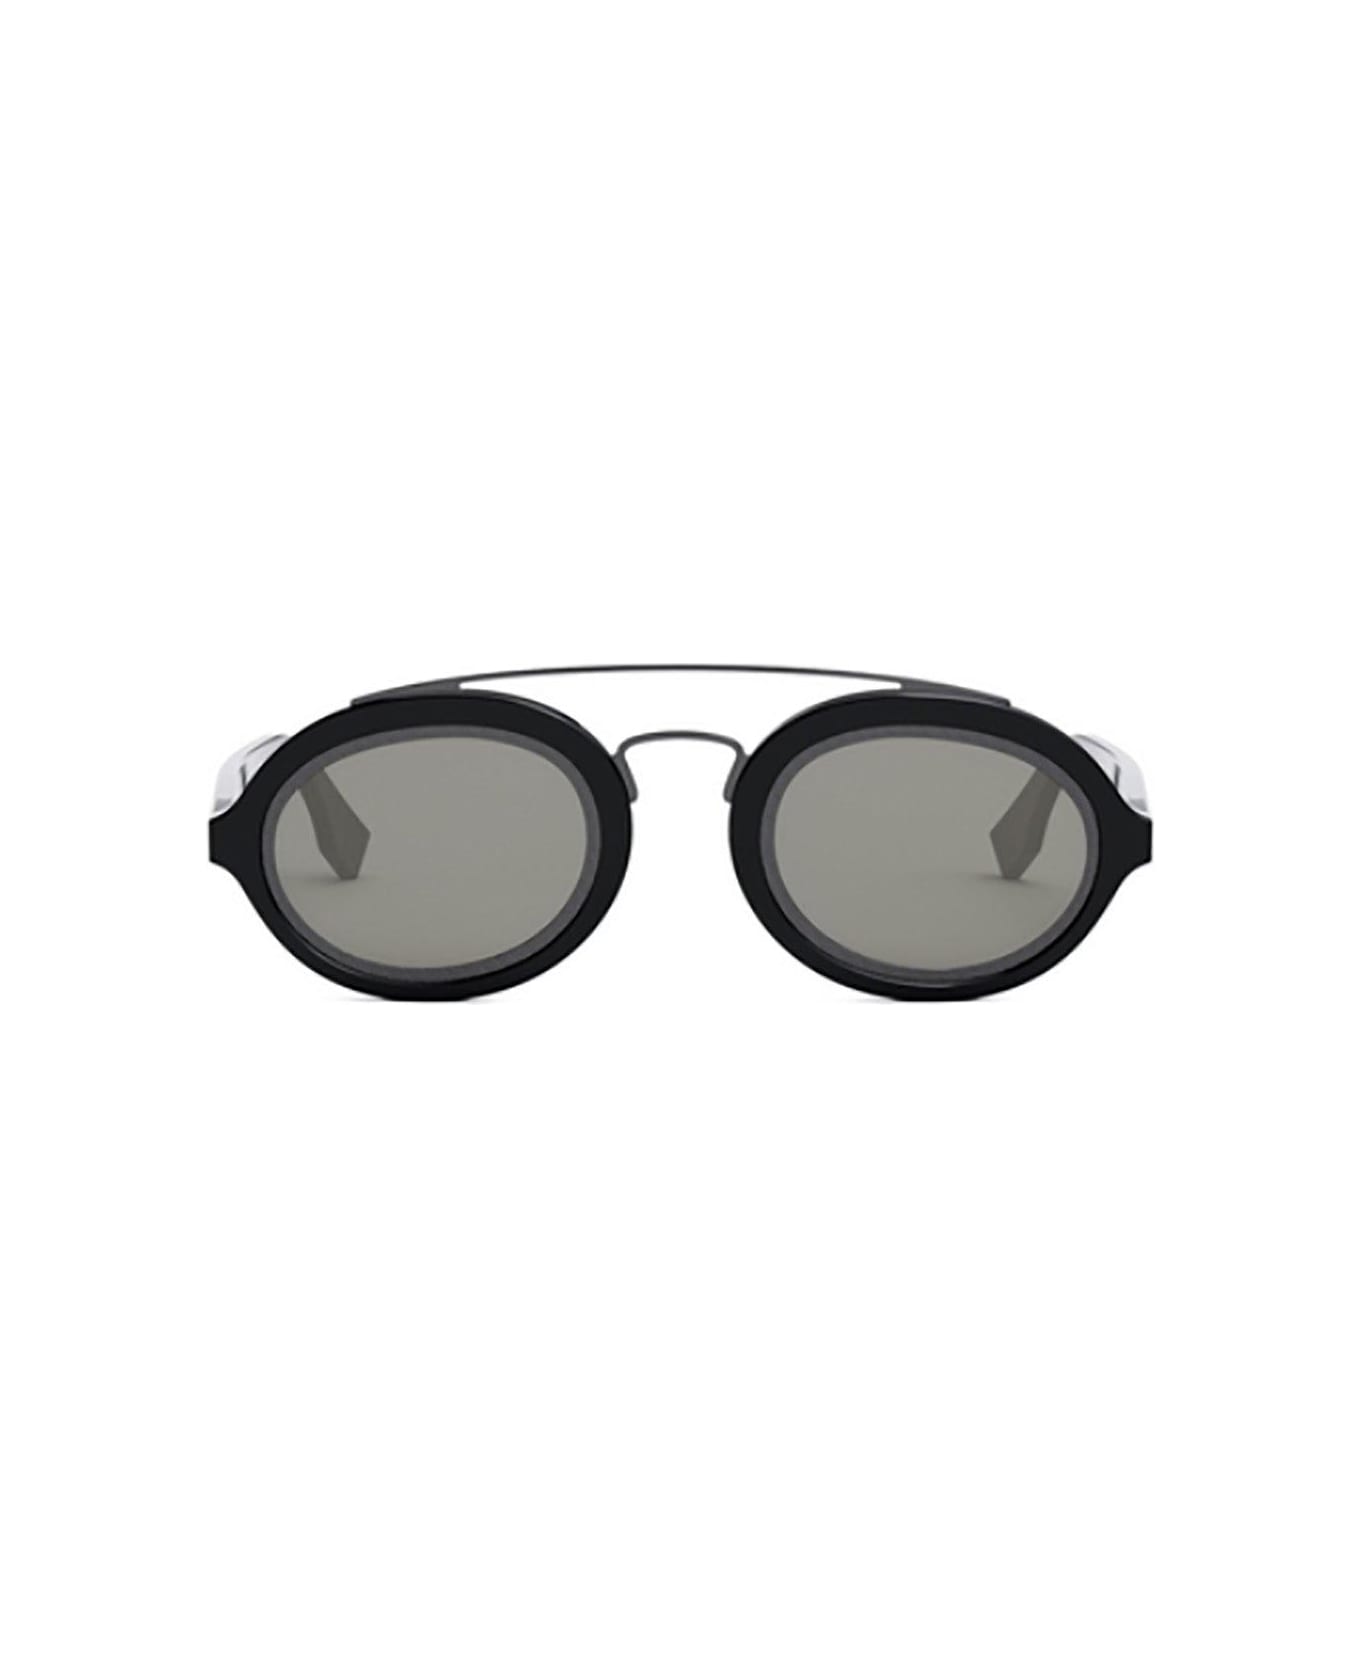 Fendi Eyewear Oval Frame Sunglasses - 01a サングラス